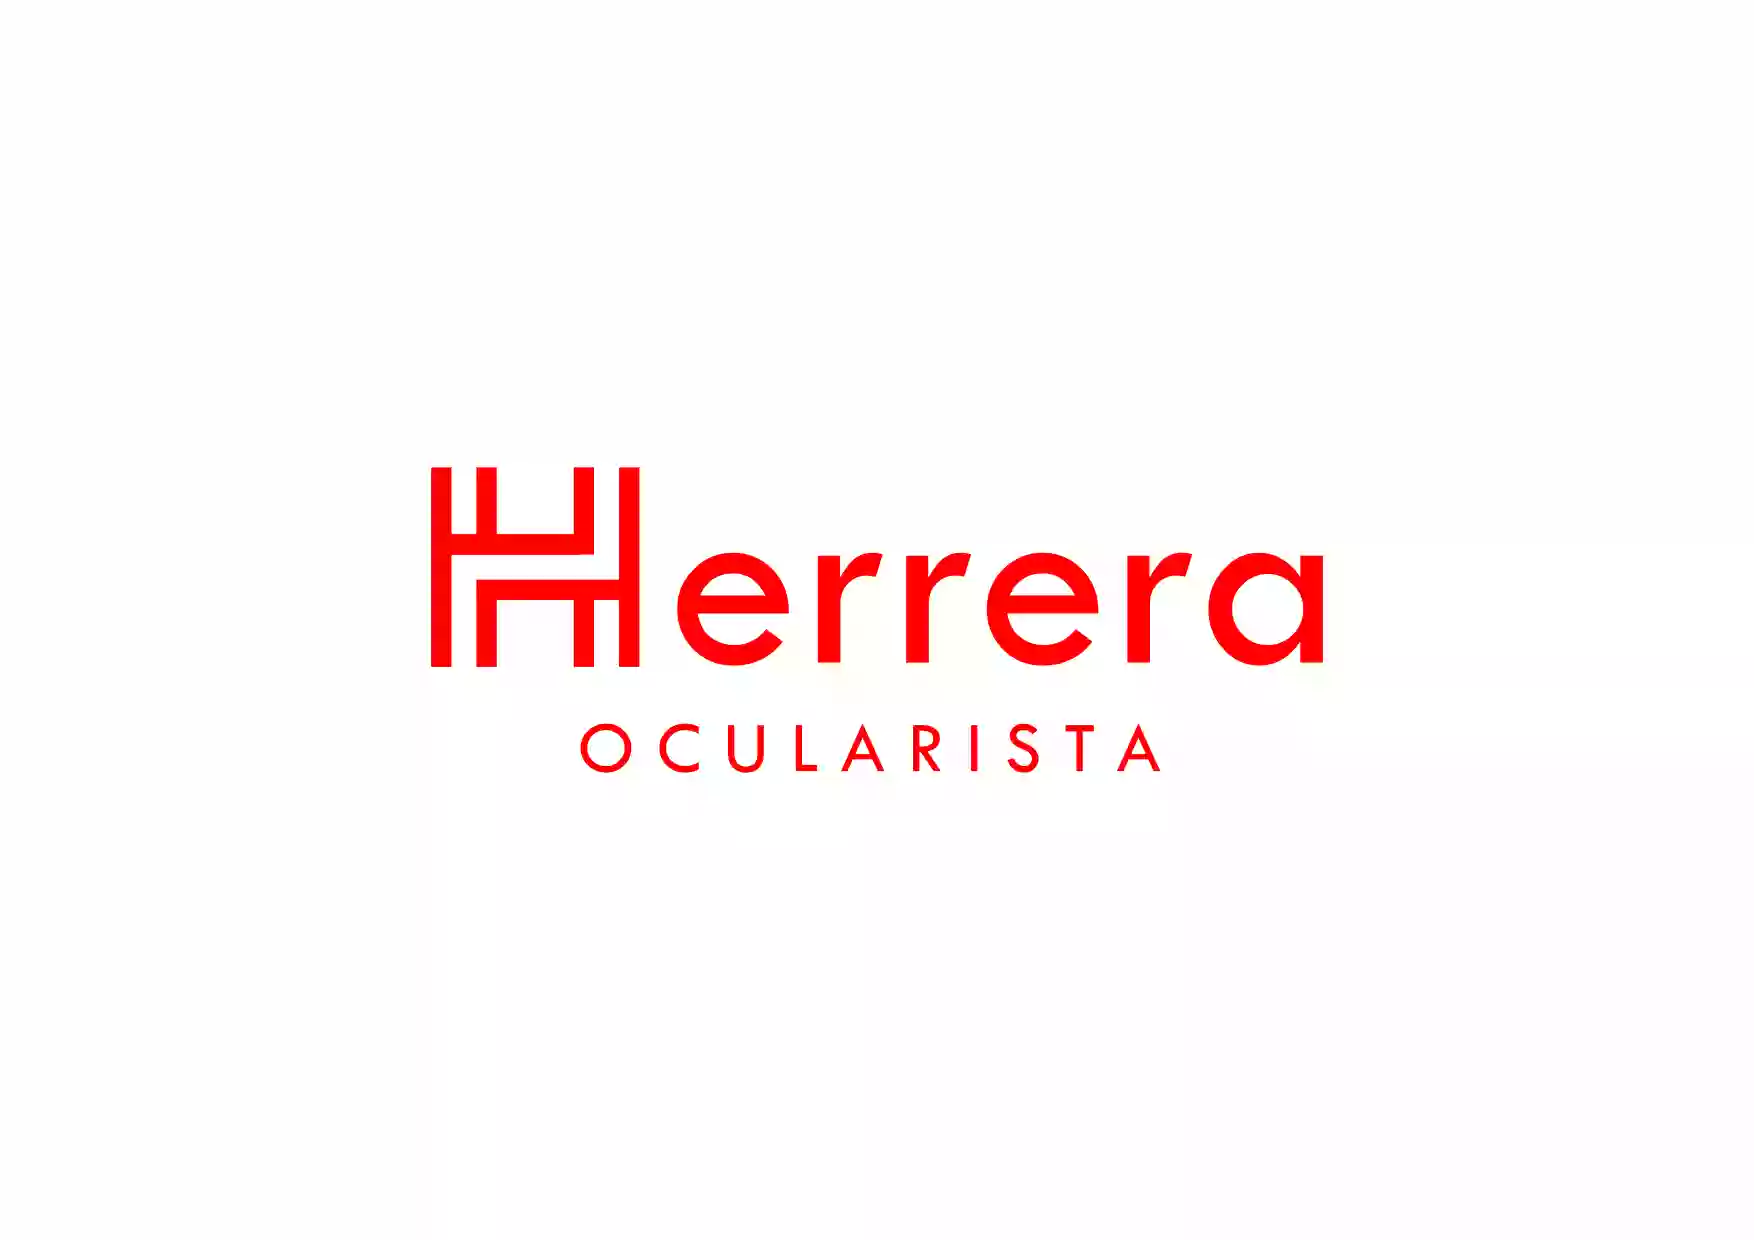 Herrera Ocularista